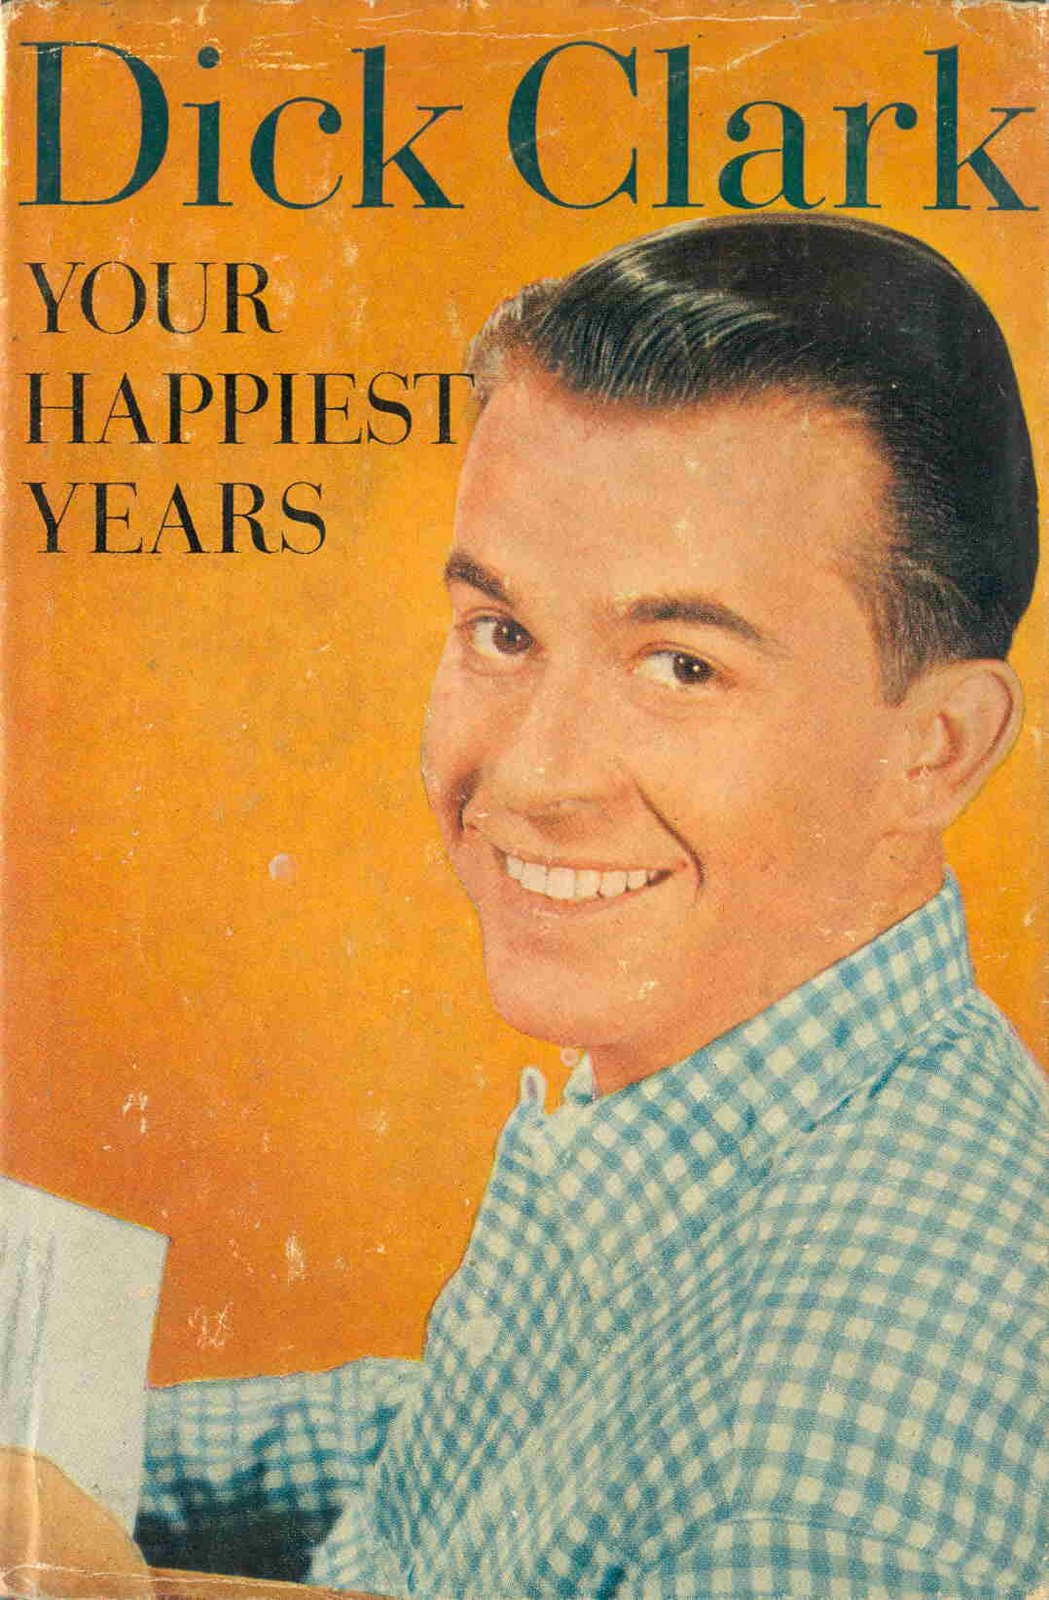 Dick clark the happiest years